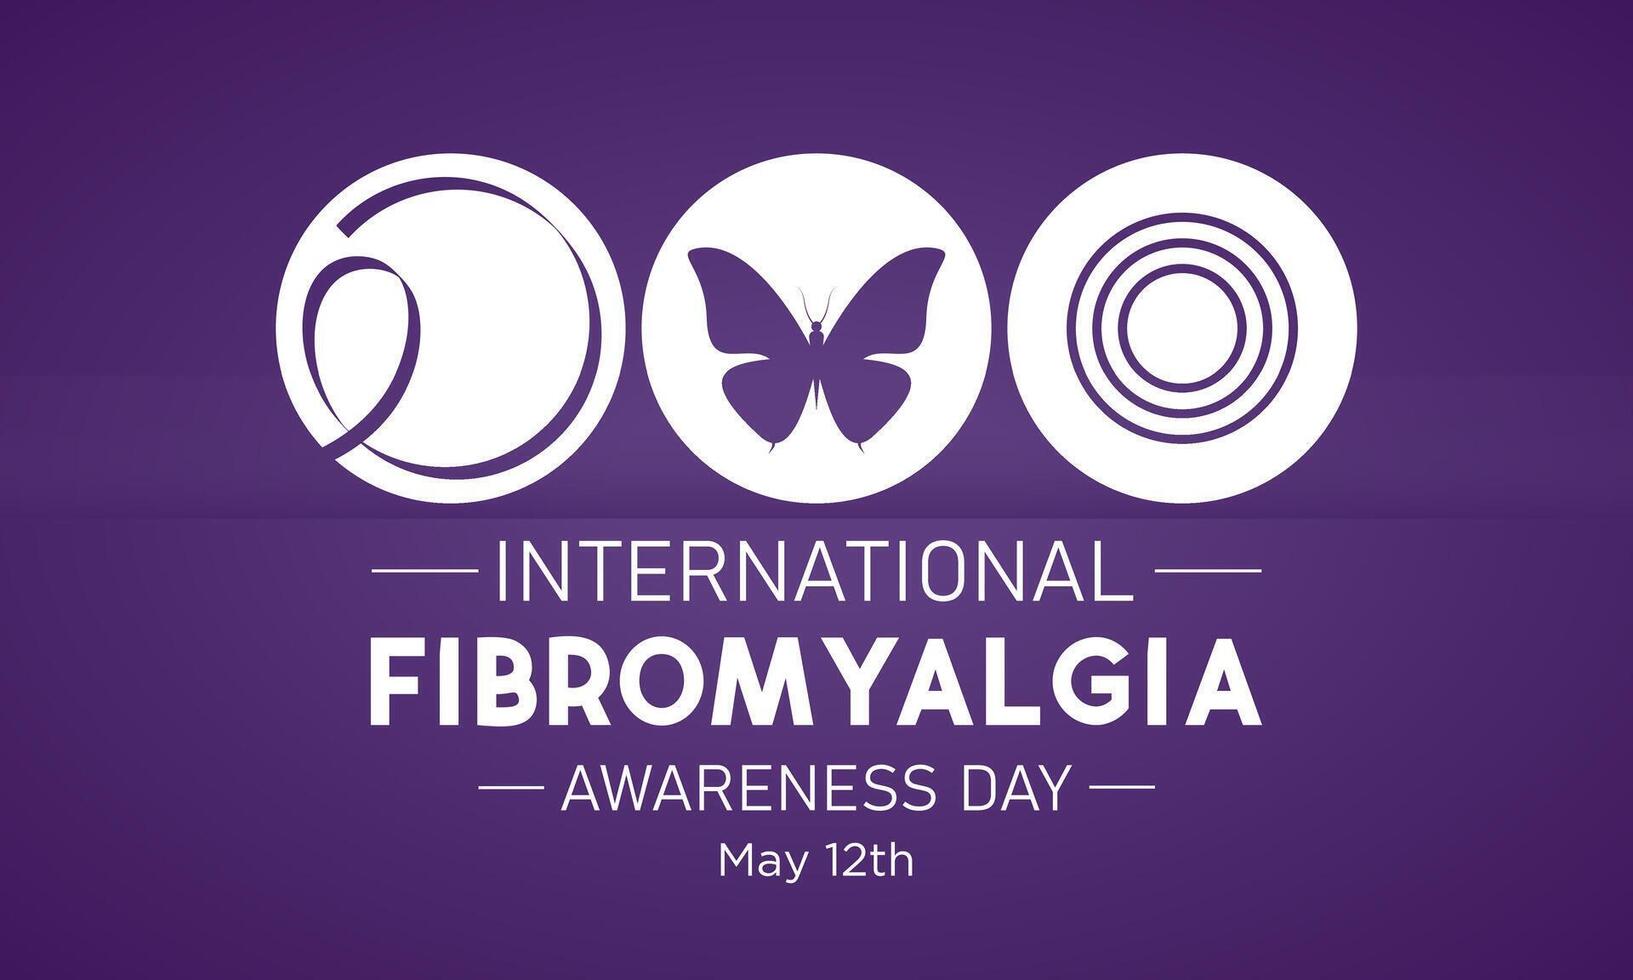 International Fibromyalgia Awareness Day, May 12. Vector illustration on the theme of World Fibromyalgia and Chronic Fatigue Syndrome Awareness Day banner design.